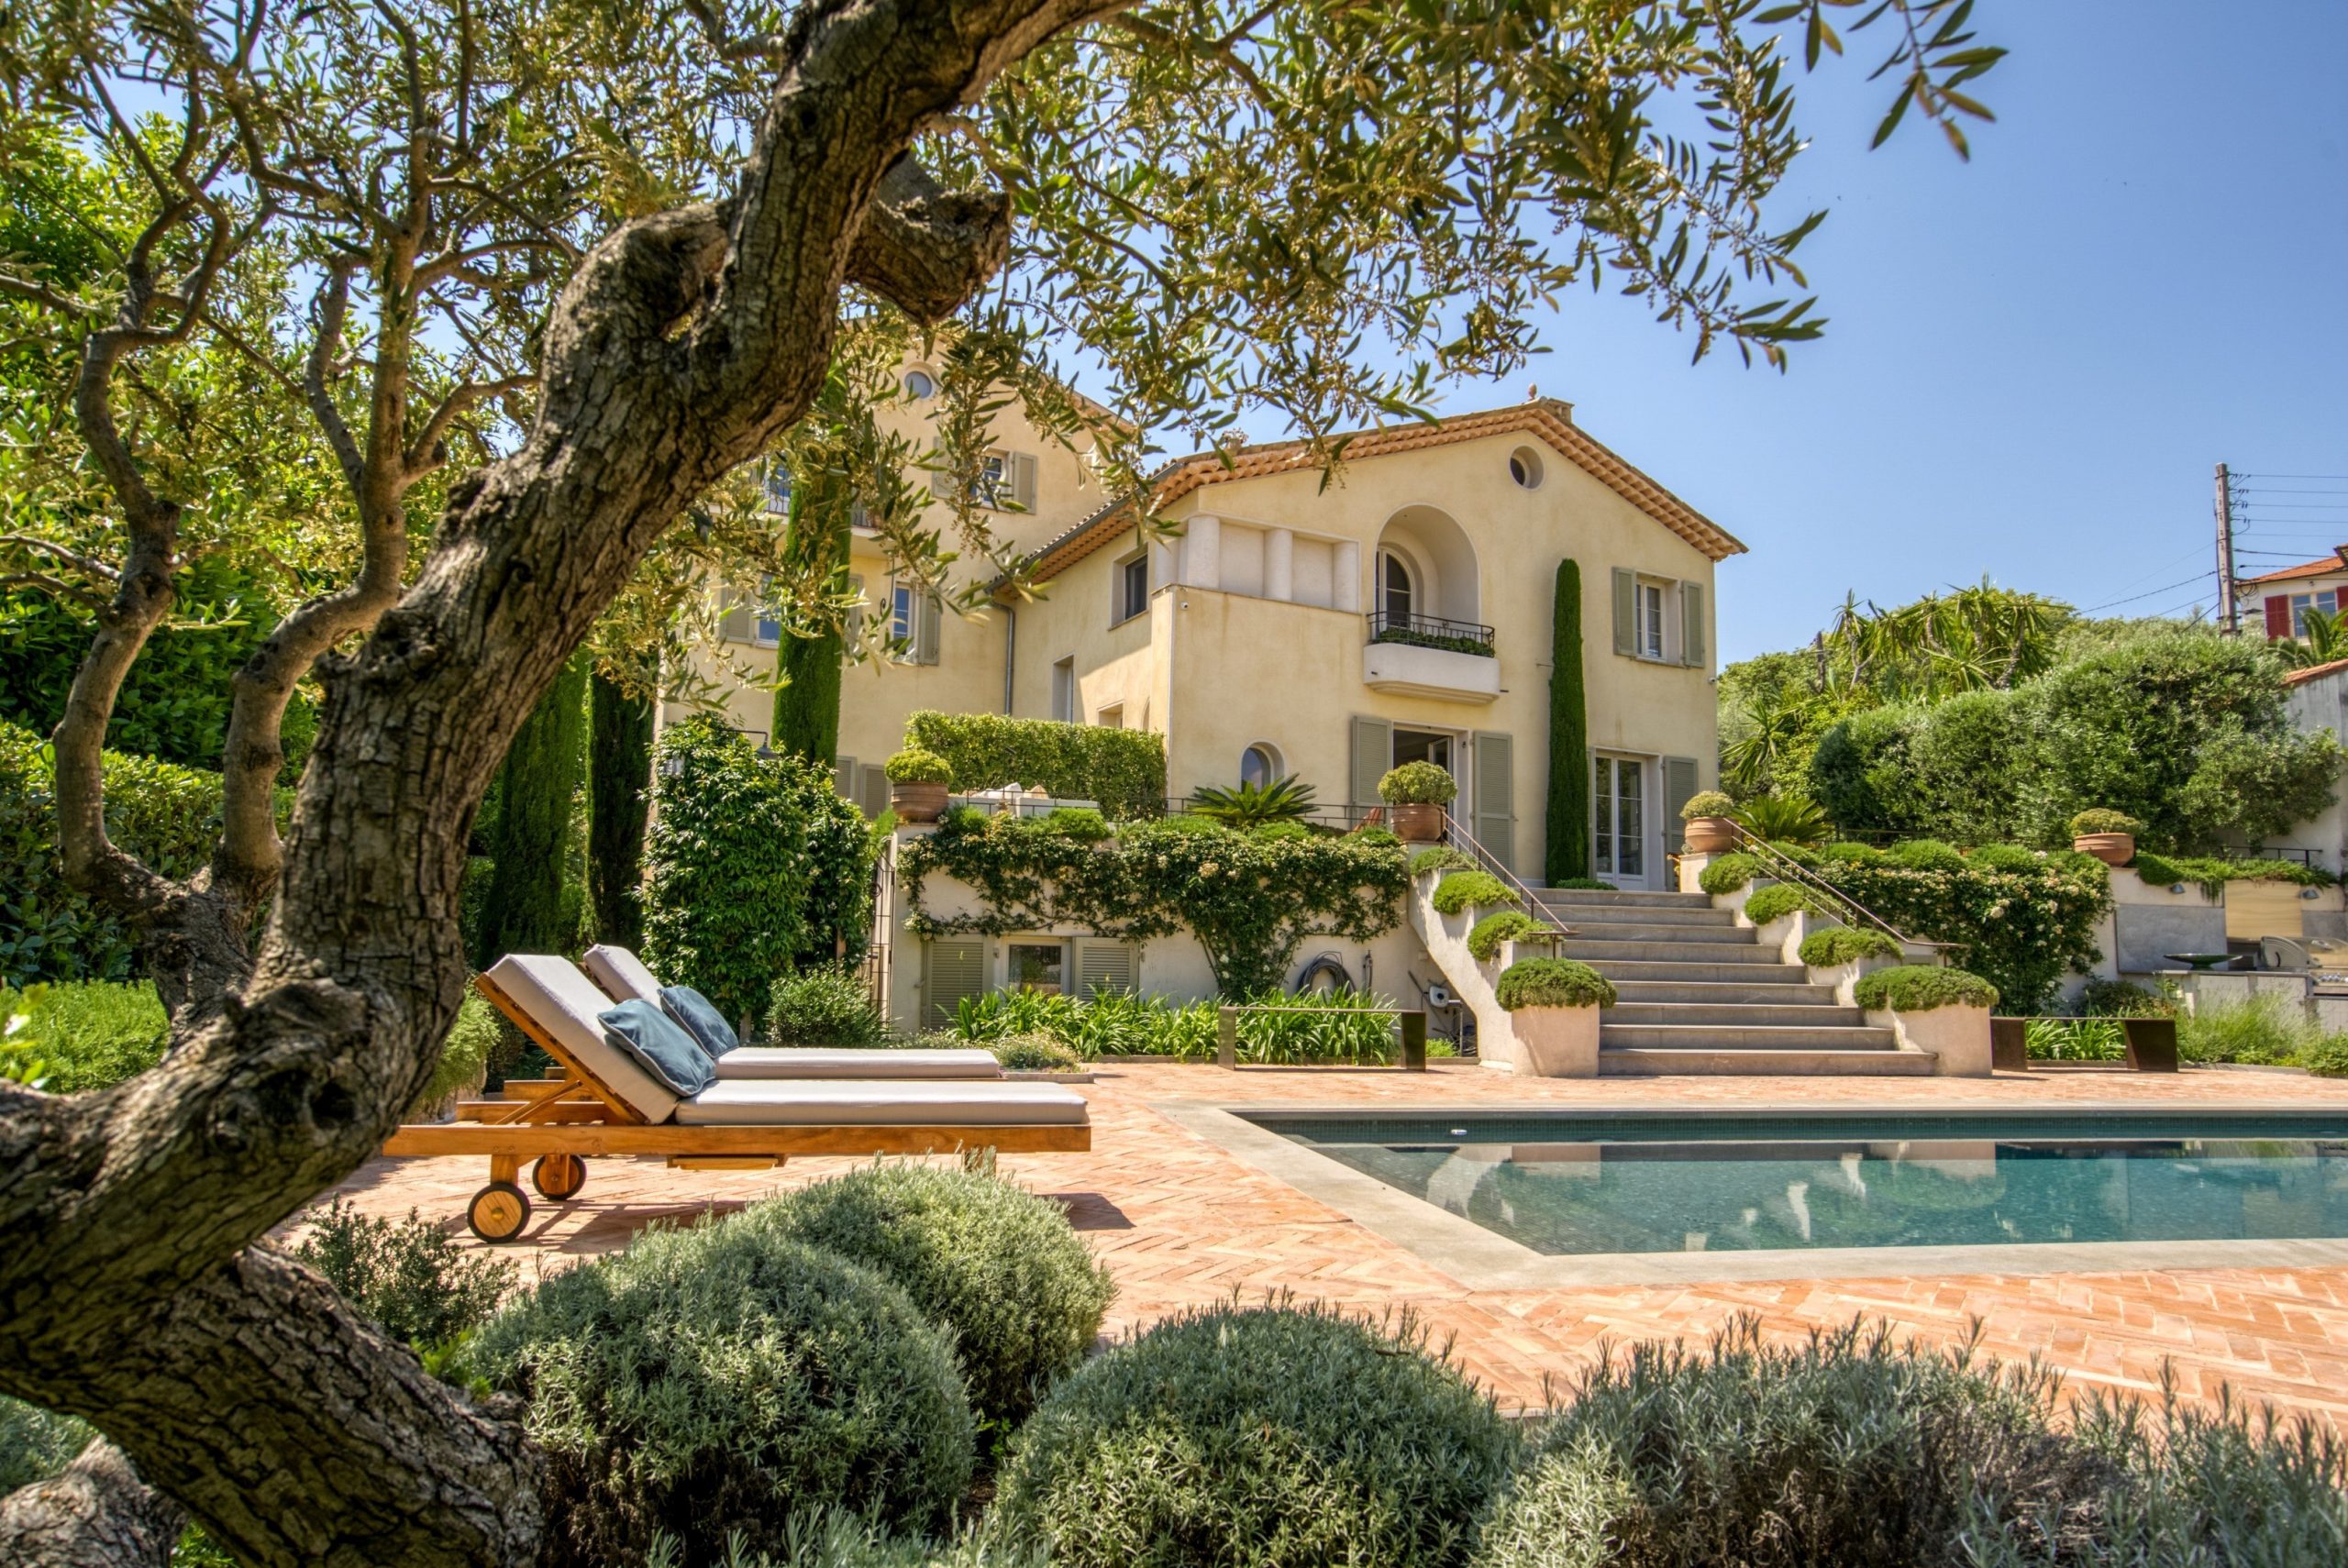 Antibes Rental - Luxury Vacation homes - Villa cap d'antibes - old town ...